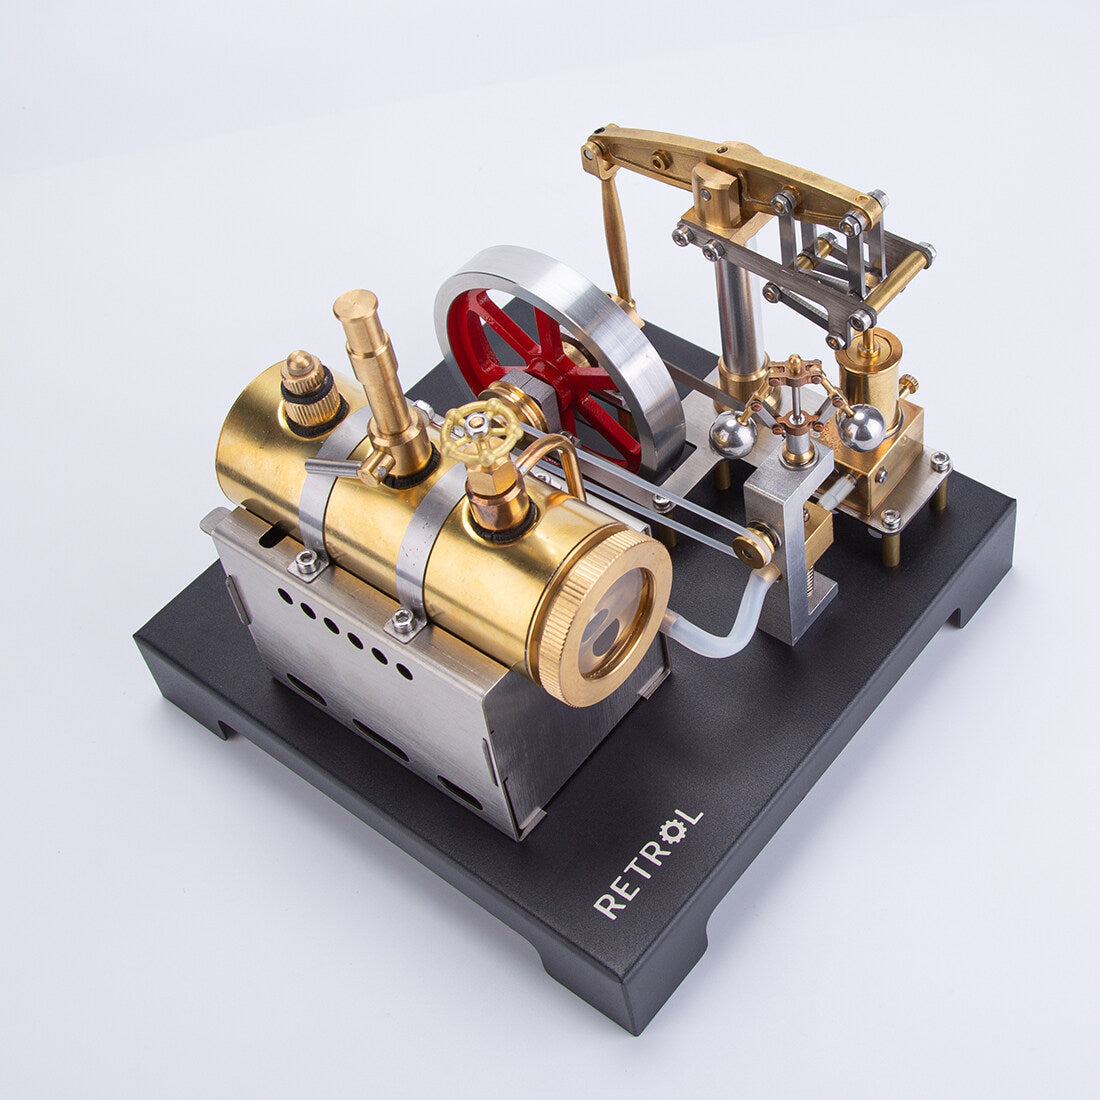 RETROL Full Metal DIY Steam Engine Model with Horizontal Boiler & Centrifugal Flyball Governor (84PCS) enginediyshop